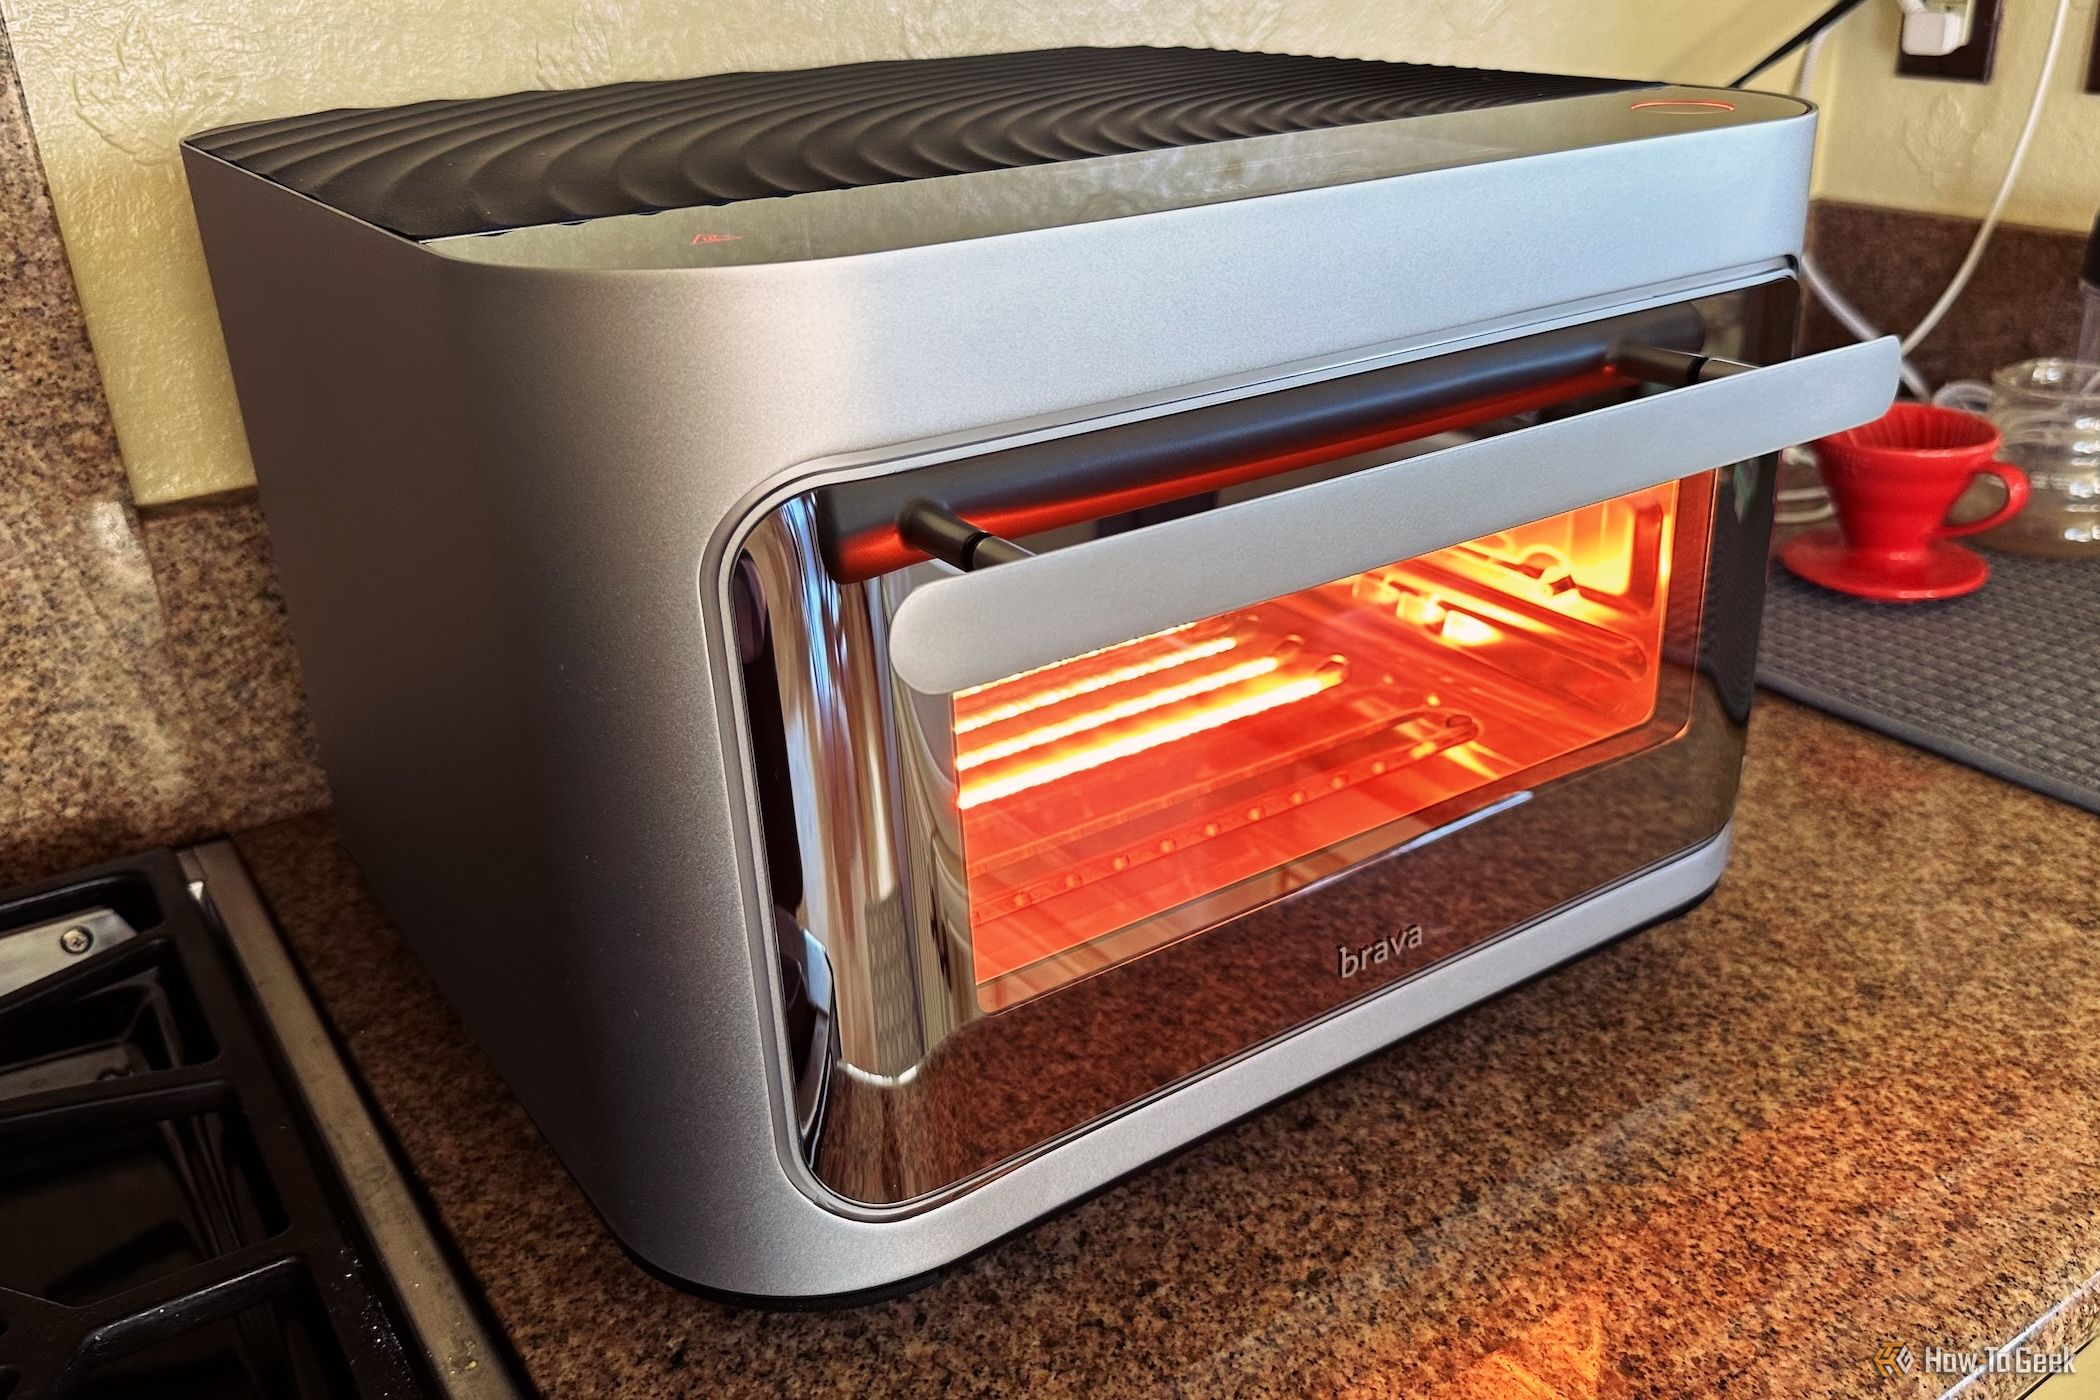 Brava's light-powered smart oven is too expensive to make sense